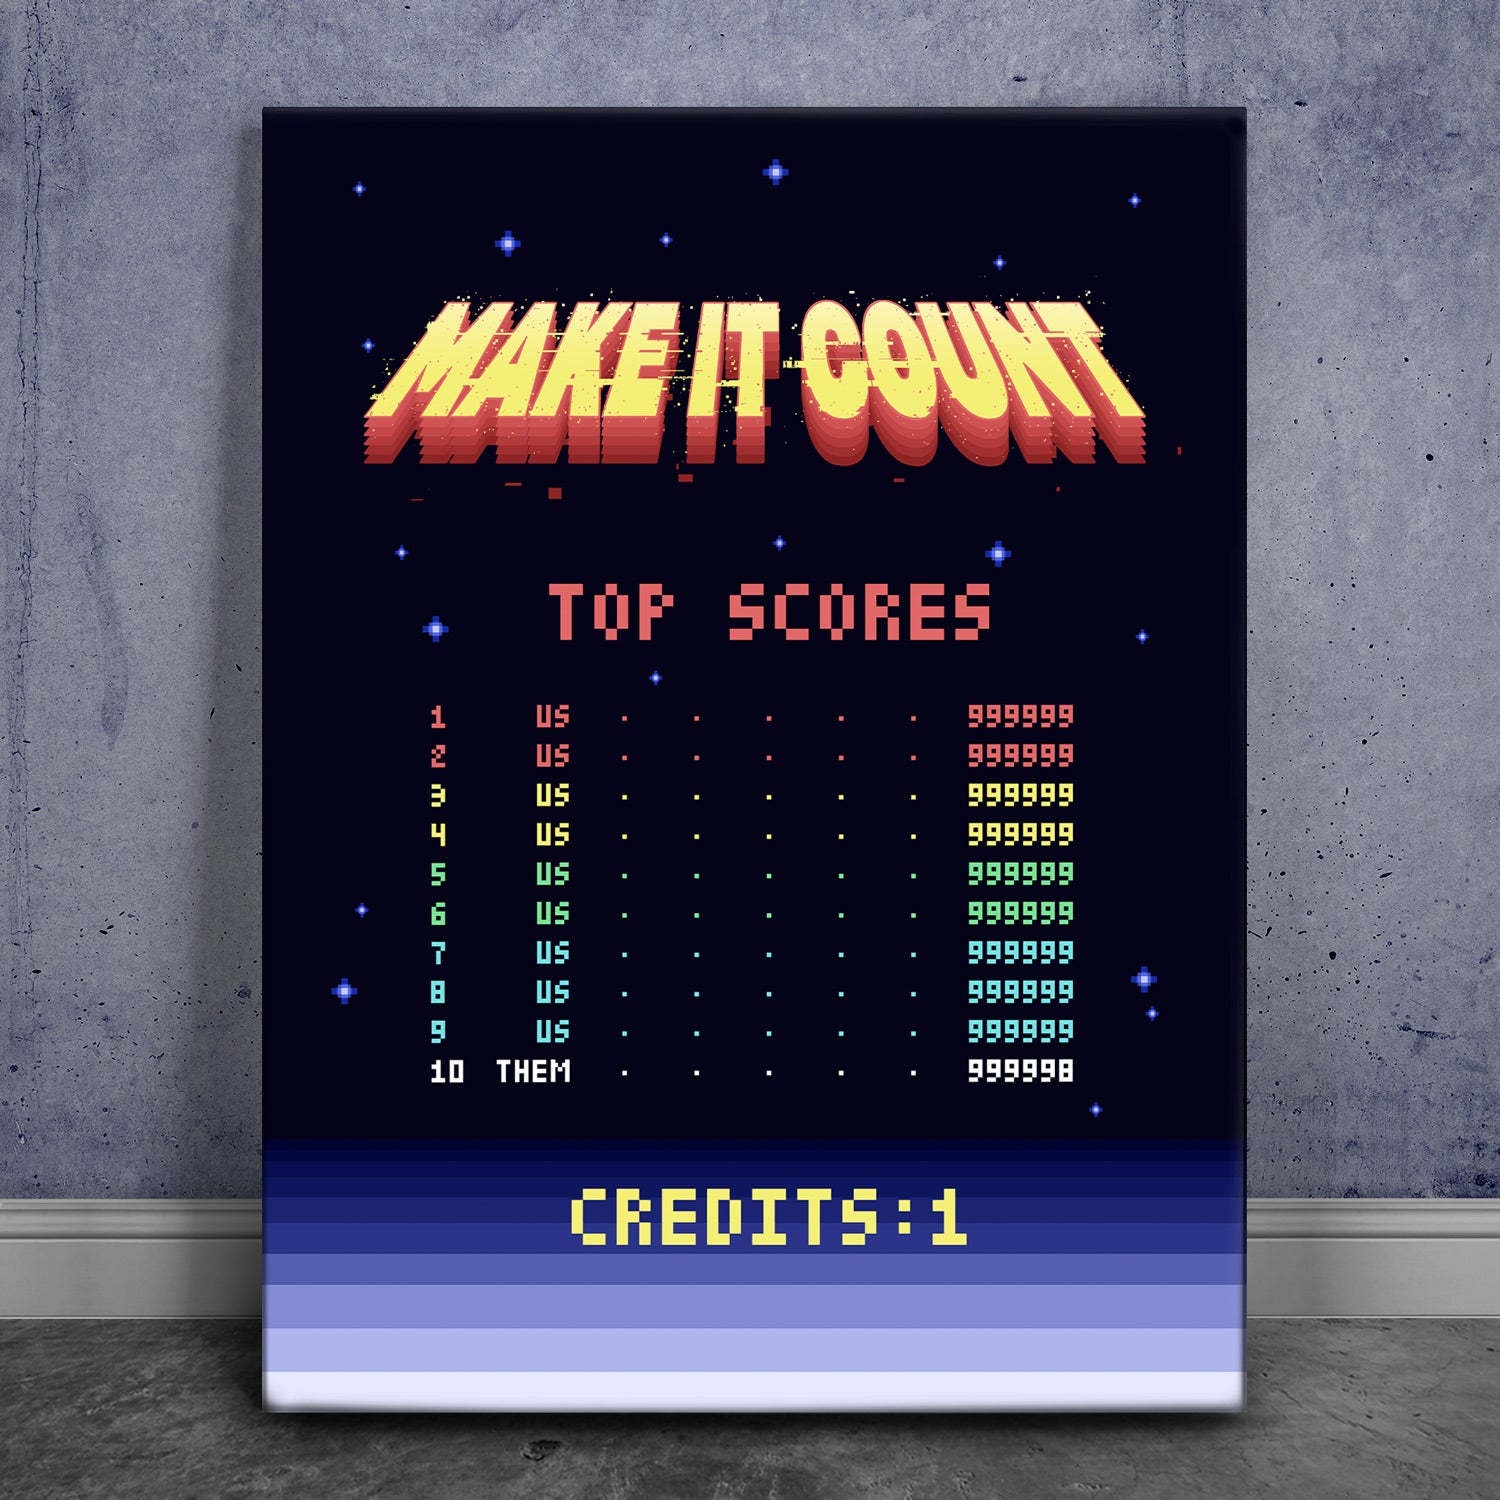 Make It Count - Top Scores